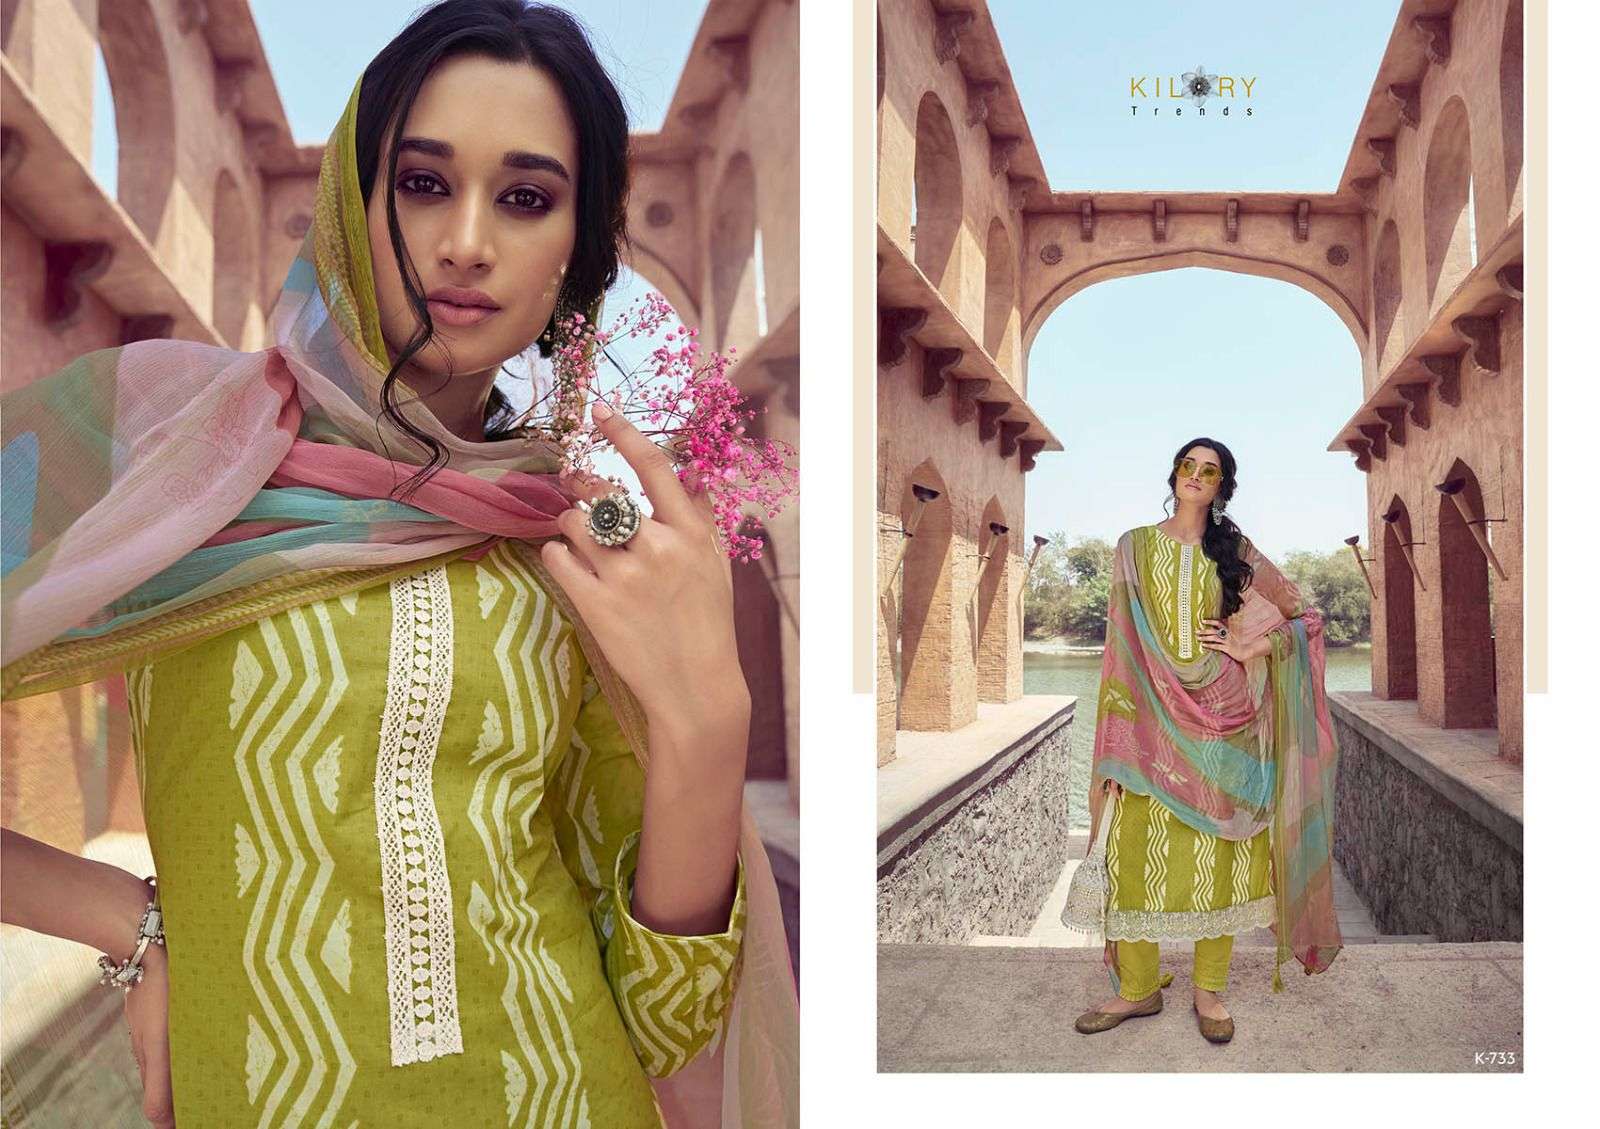 kilory trends essence 731-738 series fancy designer salwar kameez catalogue online dealer surat 